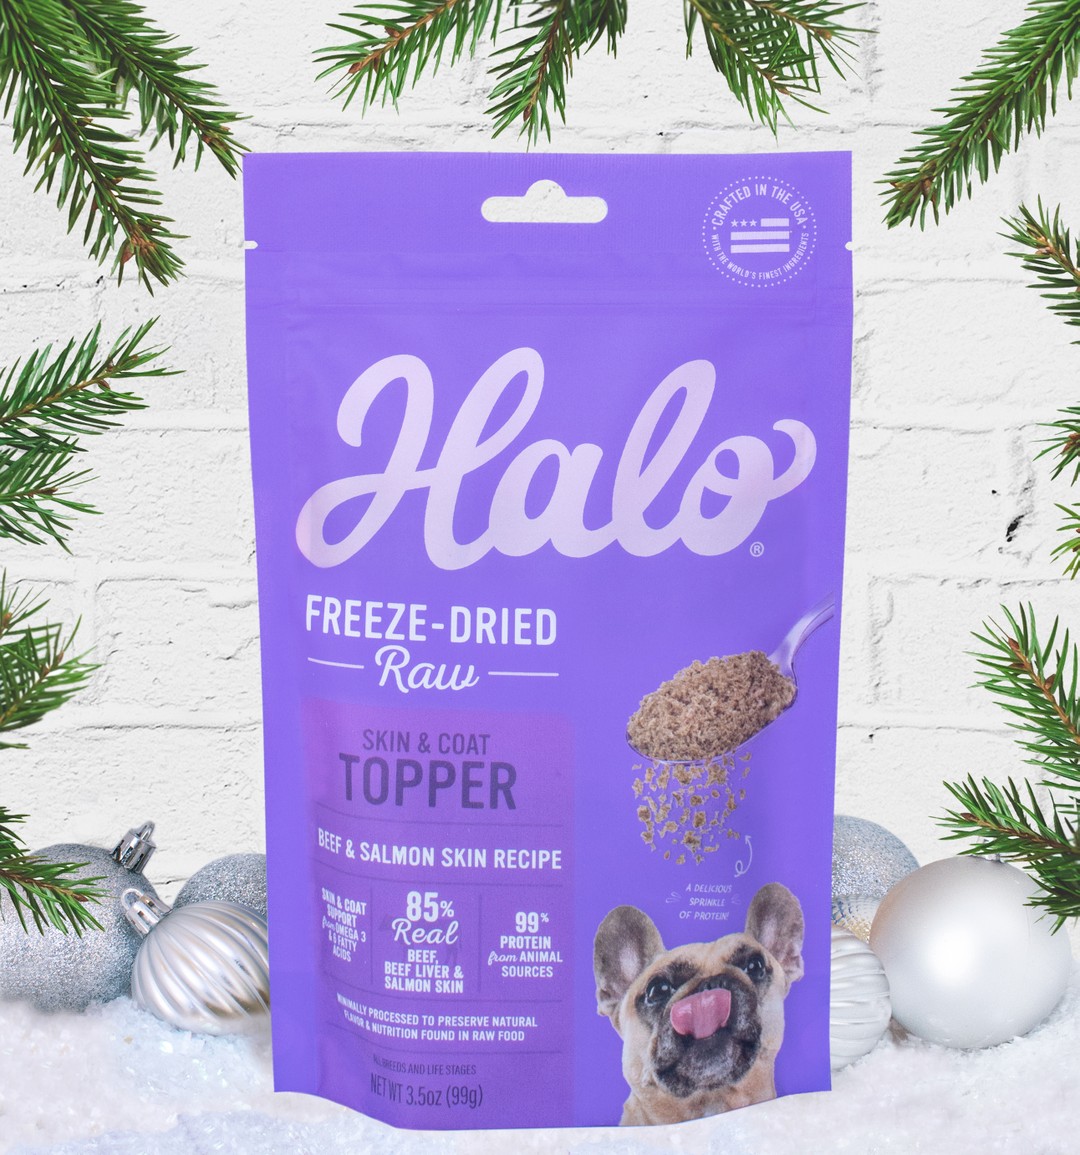 Halo Freeze-Dried Raw Skin & Coat Topper 3.5oz bag